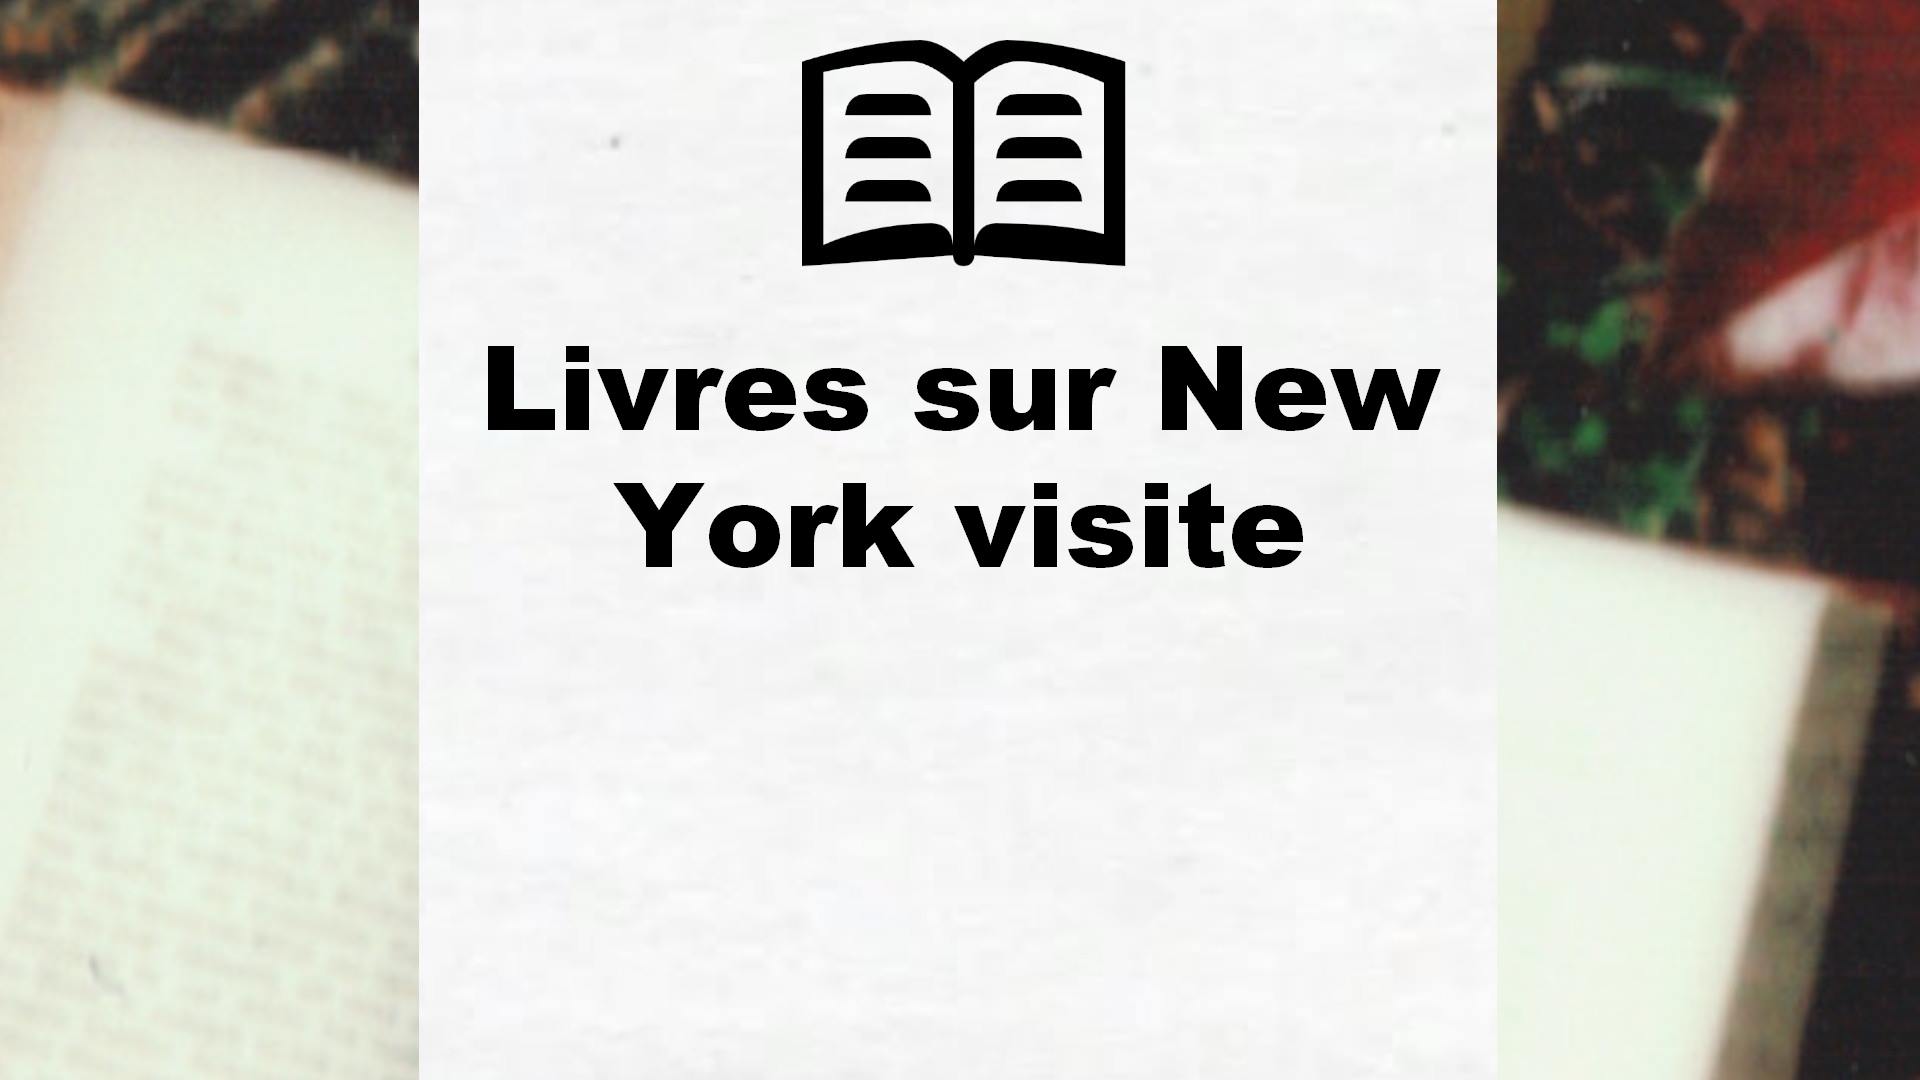 Livres sur New York visite